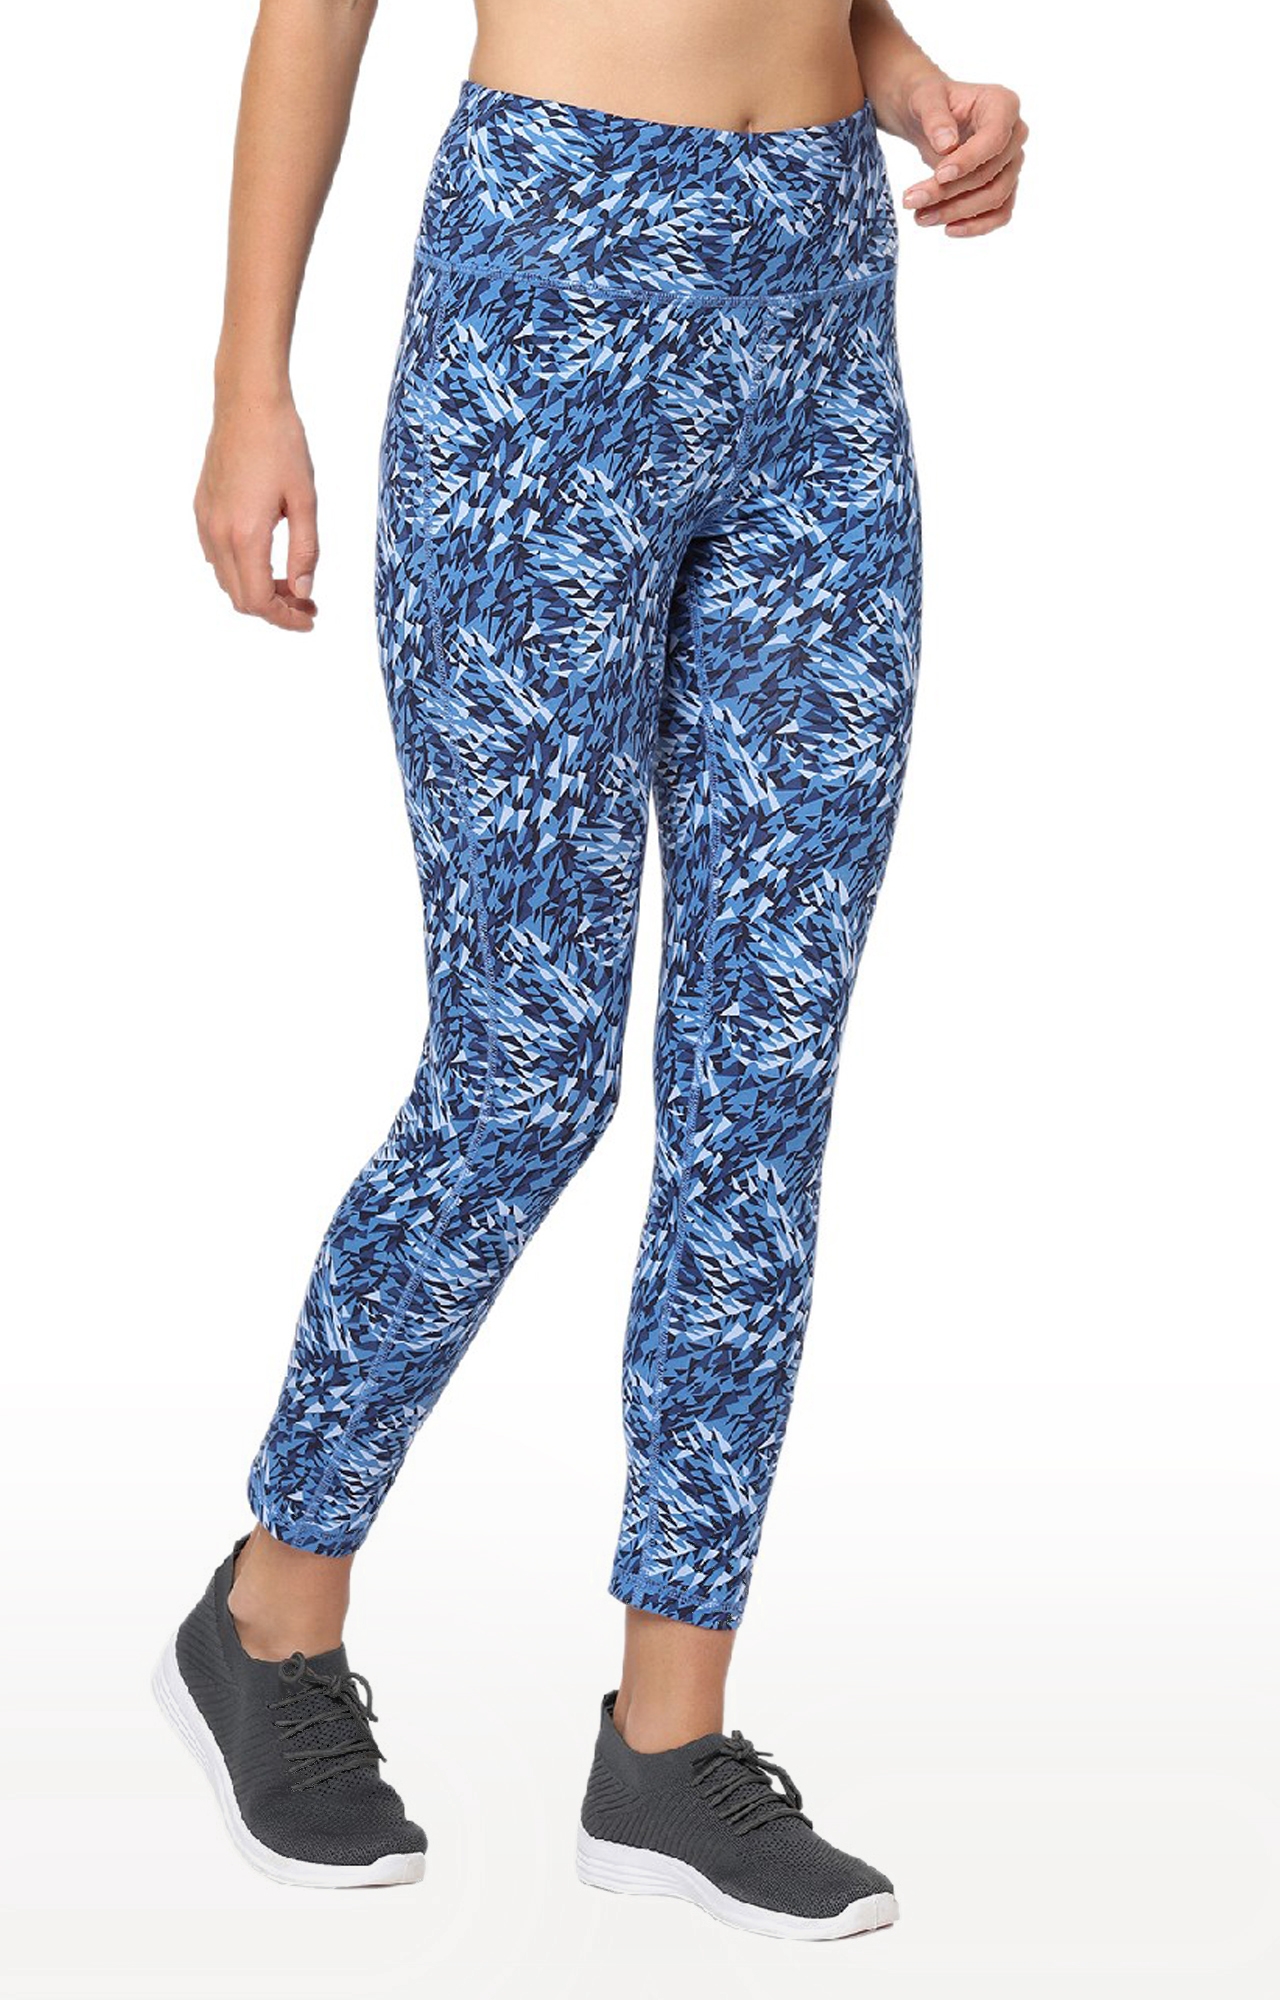 Maysixty Women's Blue Cotton Spandex Printed Yoga Pant